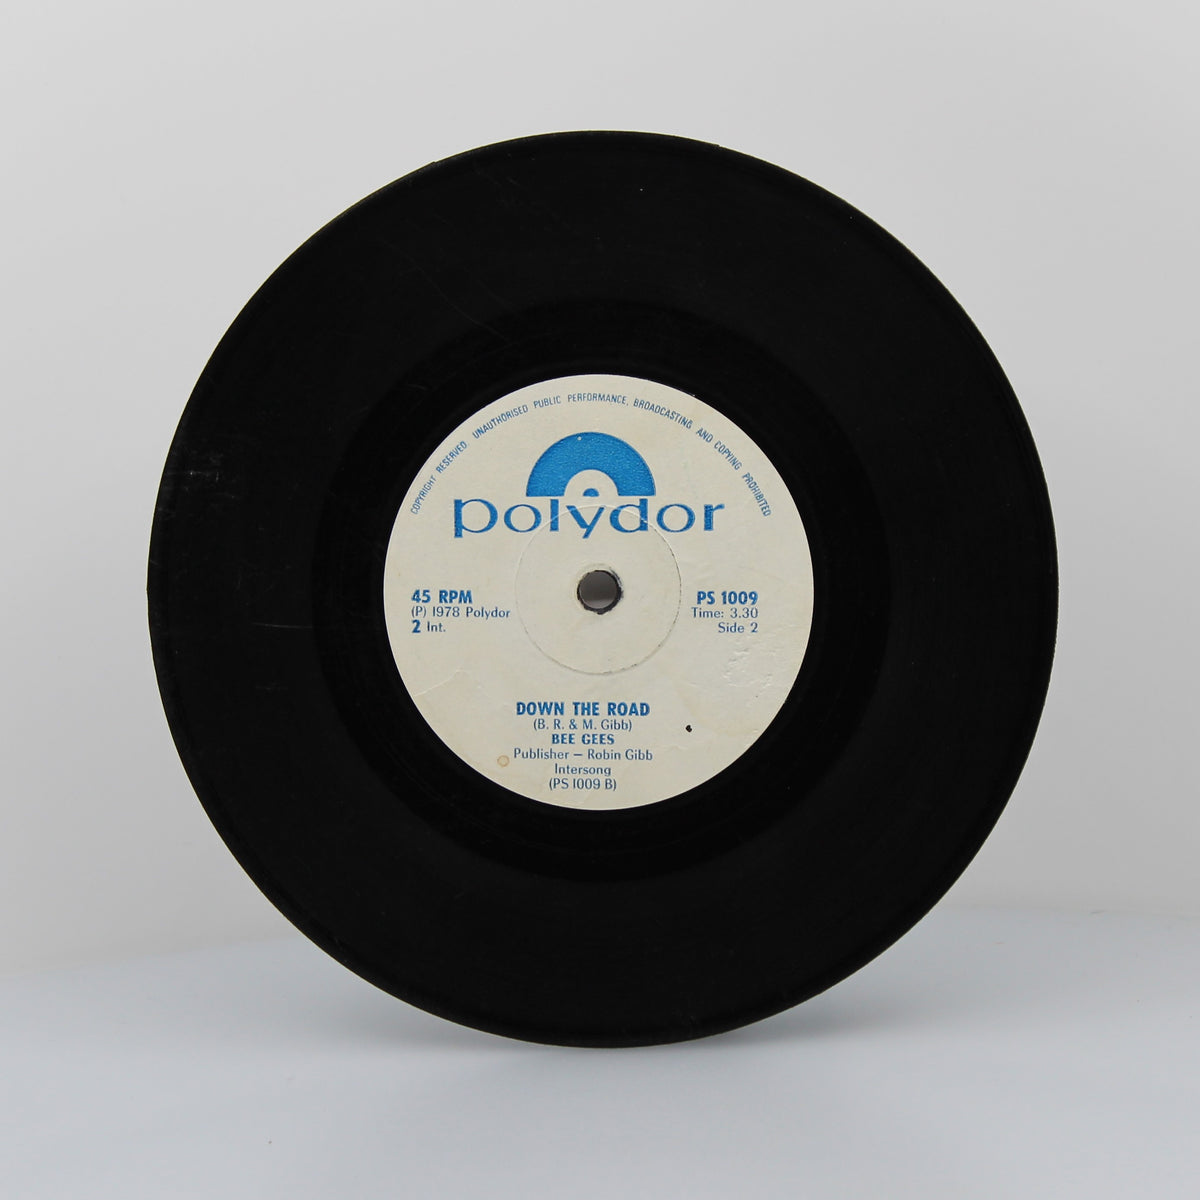 Bee Gees - Night Fever, Vinyl 7&quot; Single 45Rpm, Rhodesia 1978